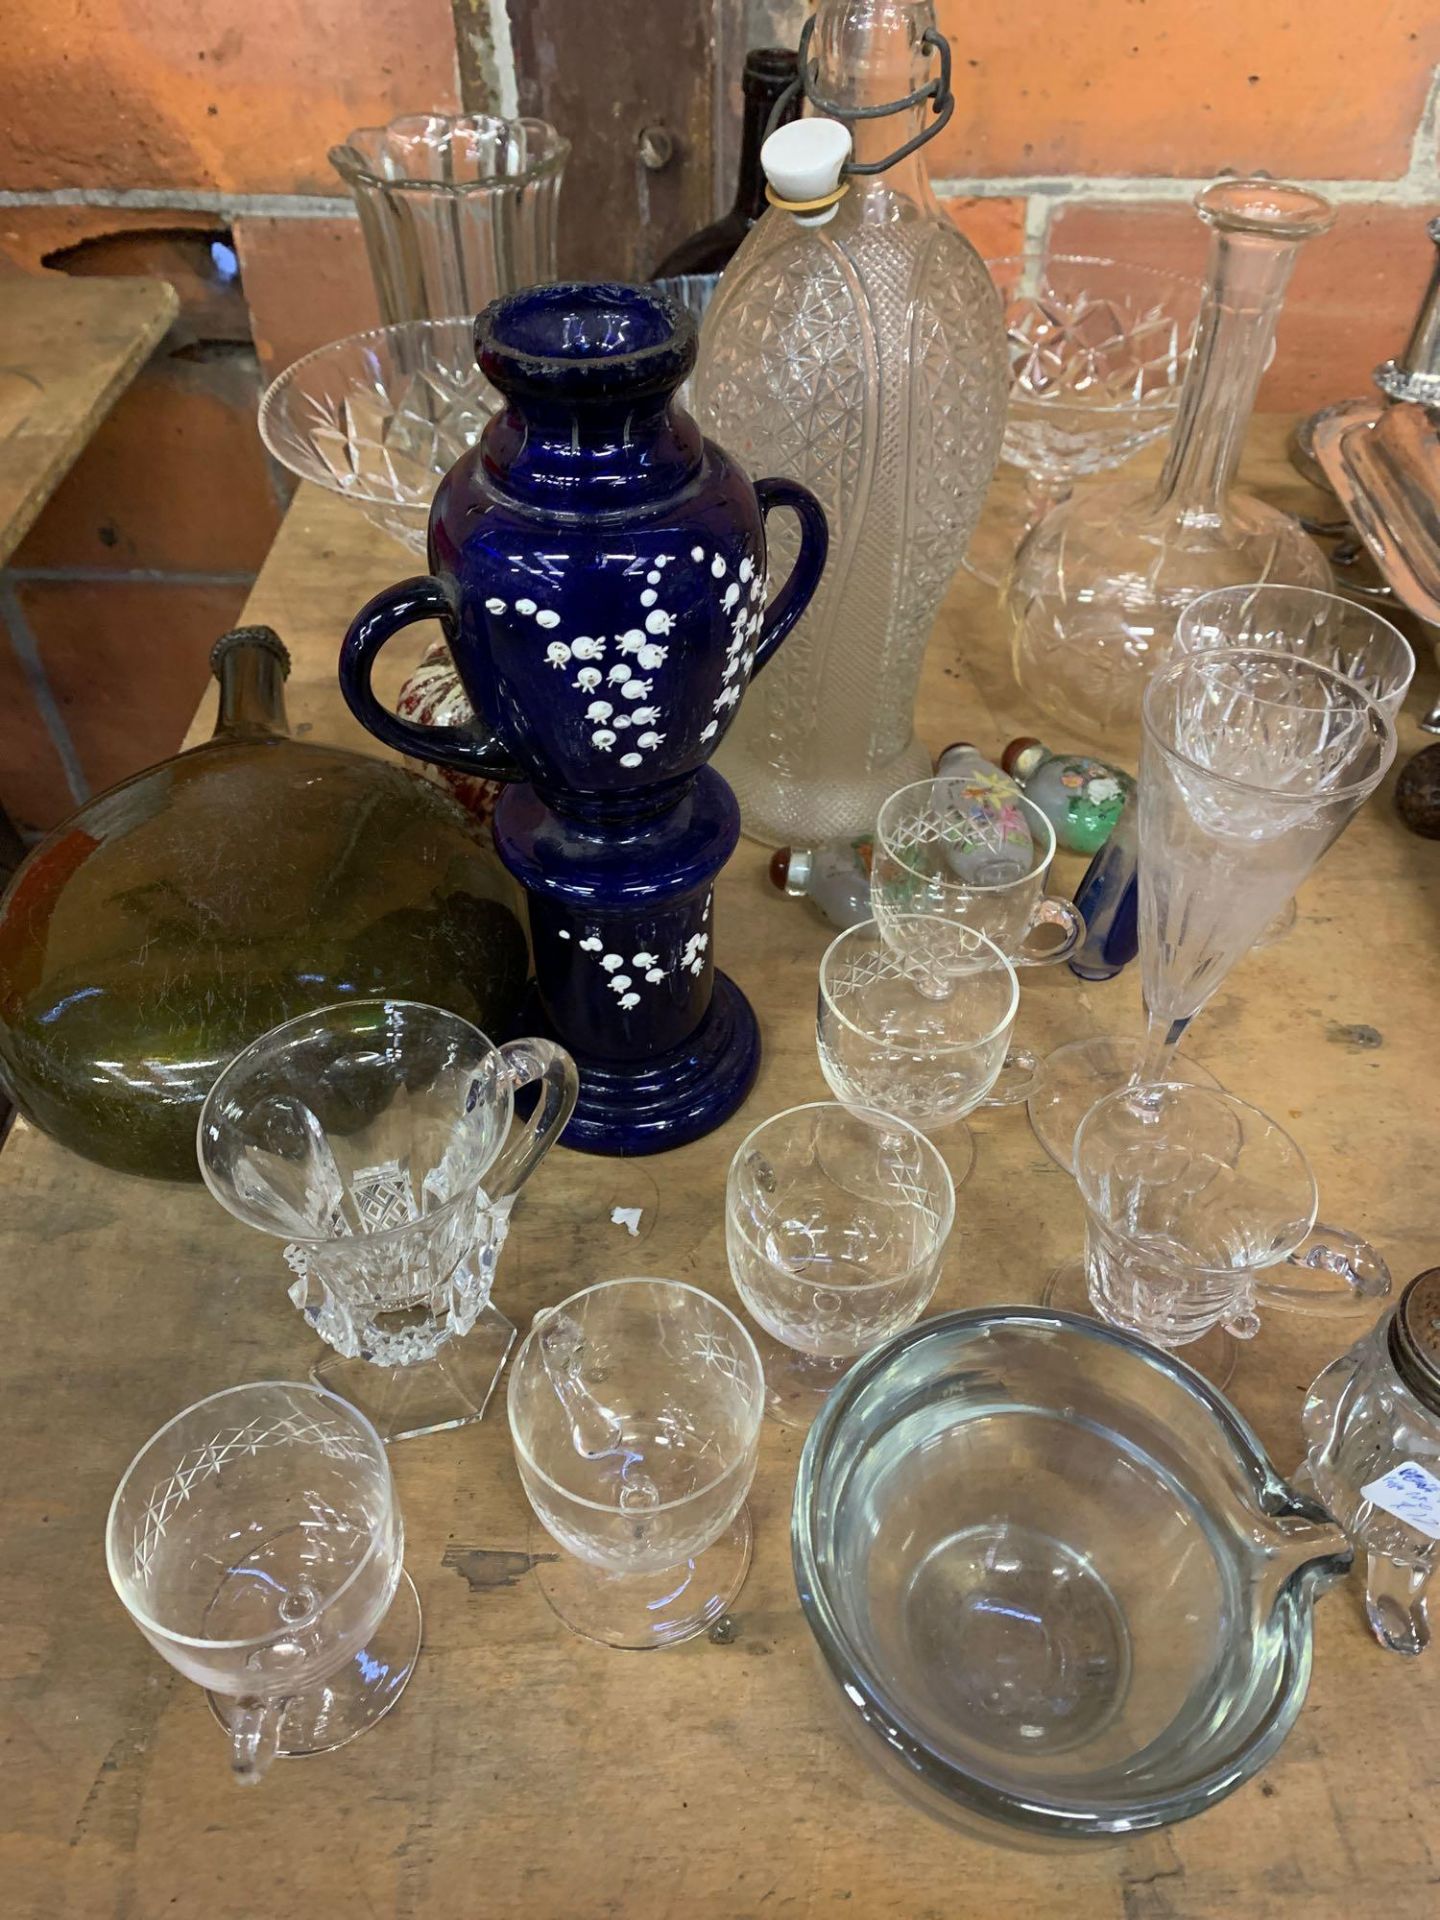 Quantity of glassware